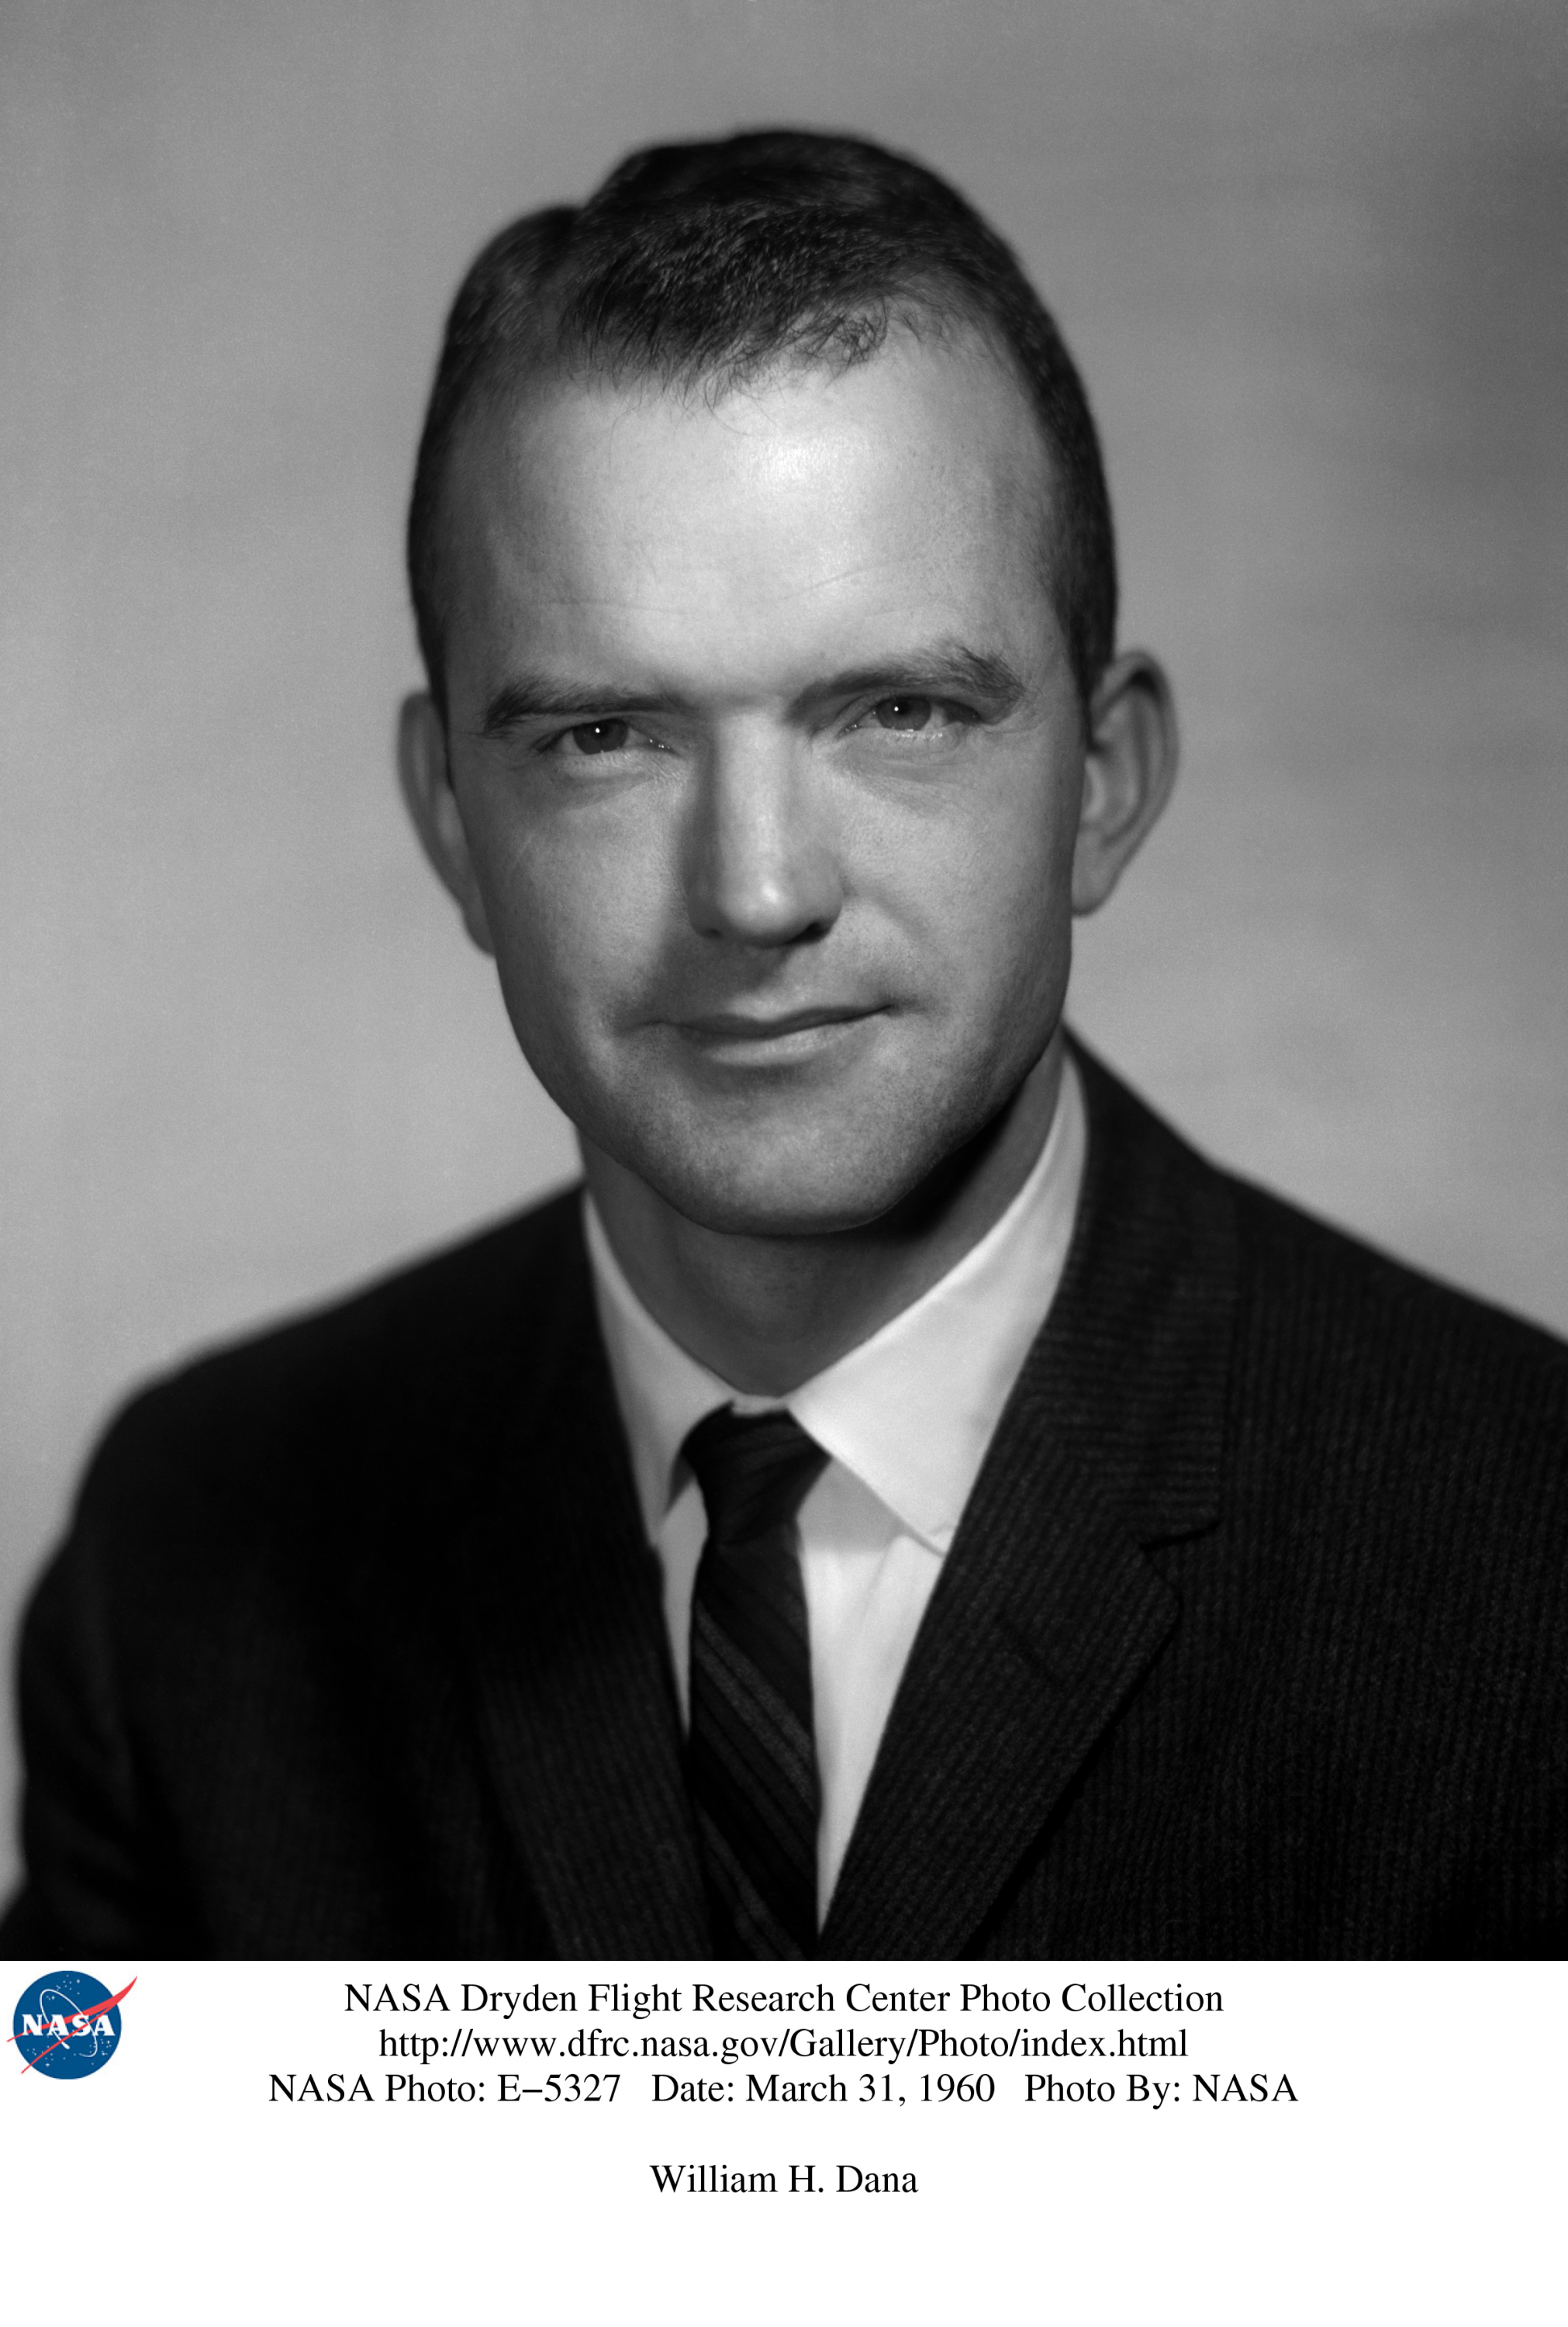 William Harvey Dana, NASA Research Pilot